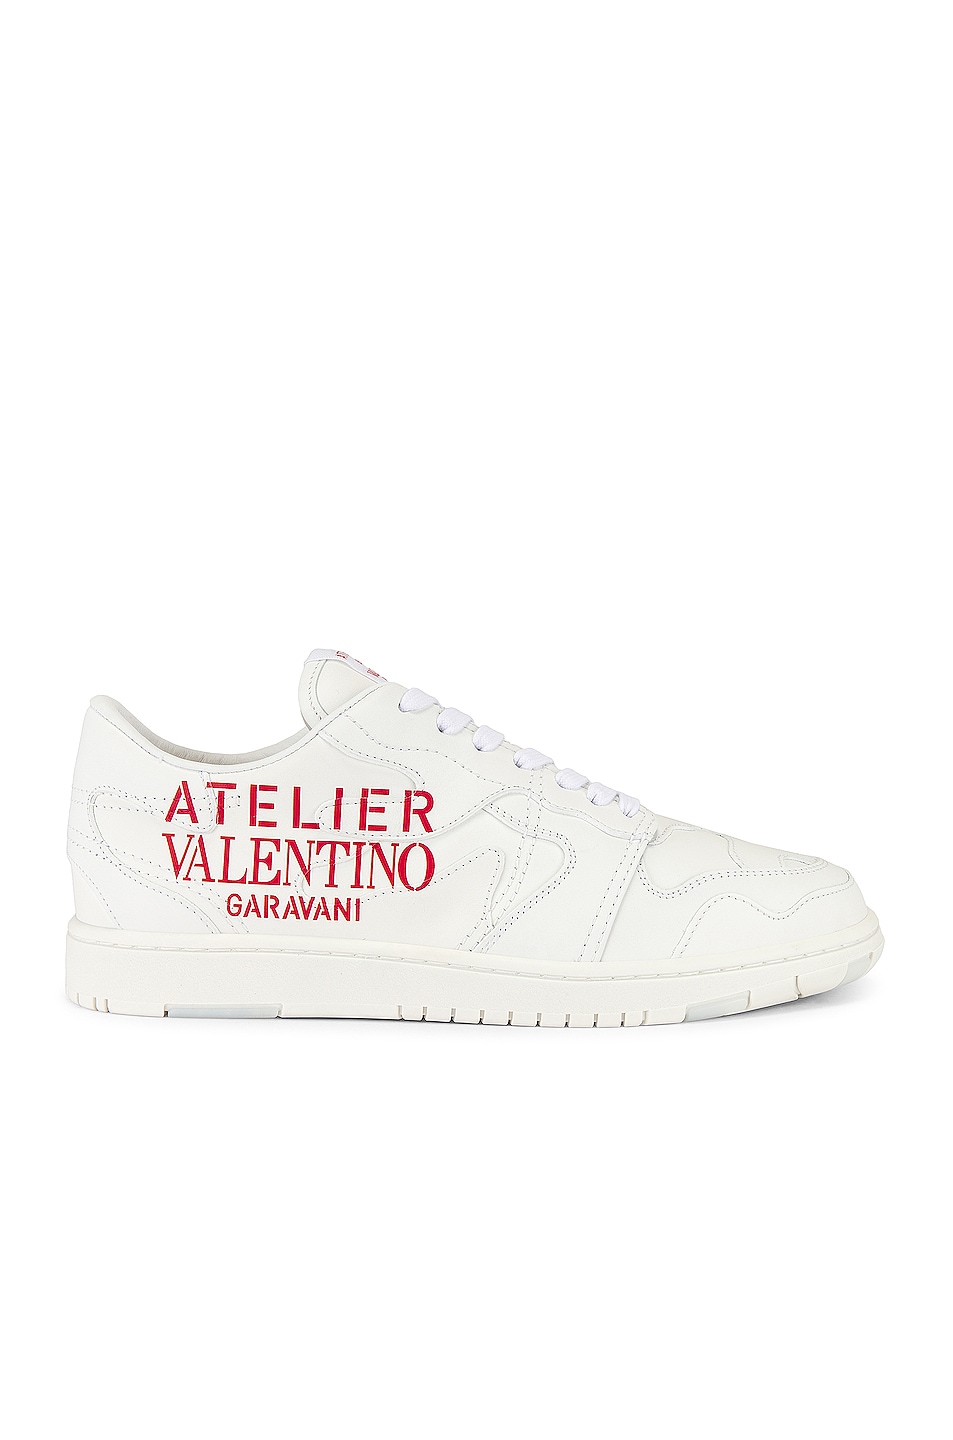 Image 1 of Valentino Garavani Atelier Valentino Sneaker in White